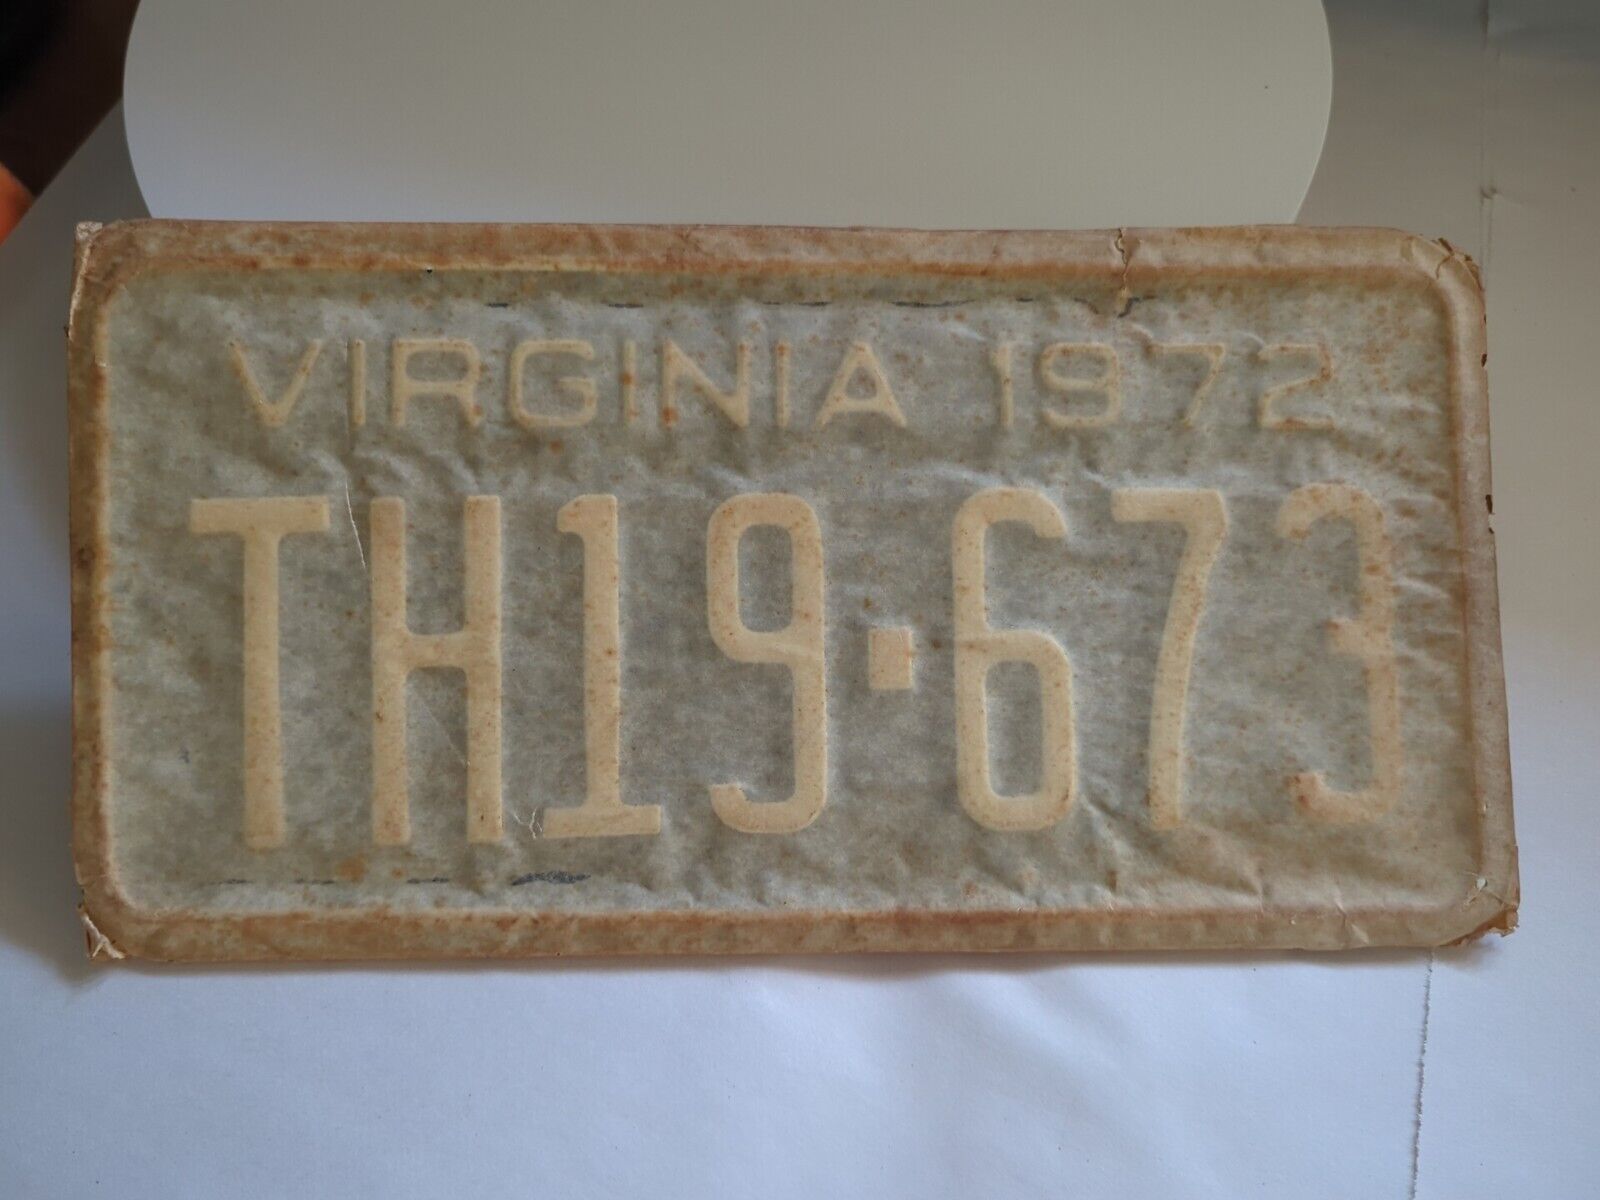 1972 Virginia License Plate Pair TH19 -673 Unused Vintage